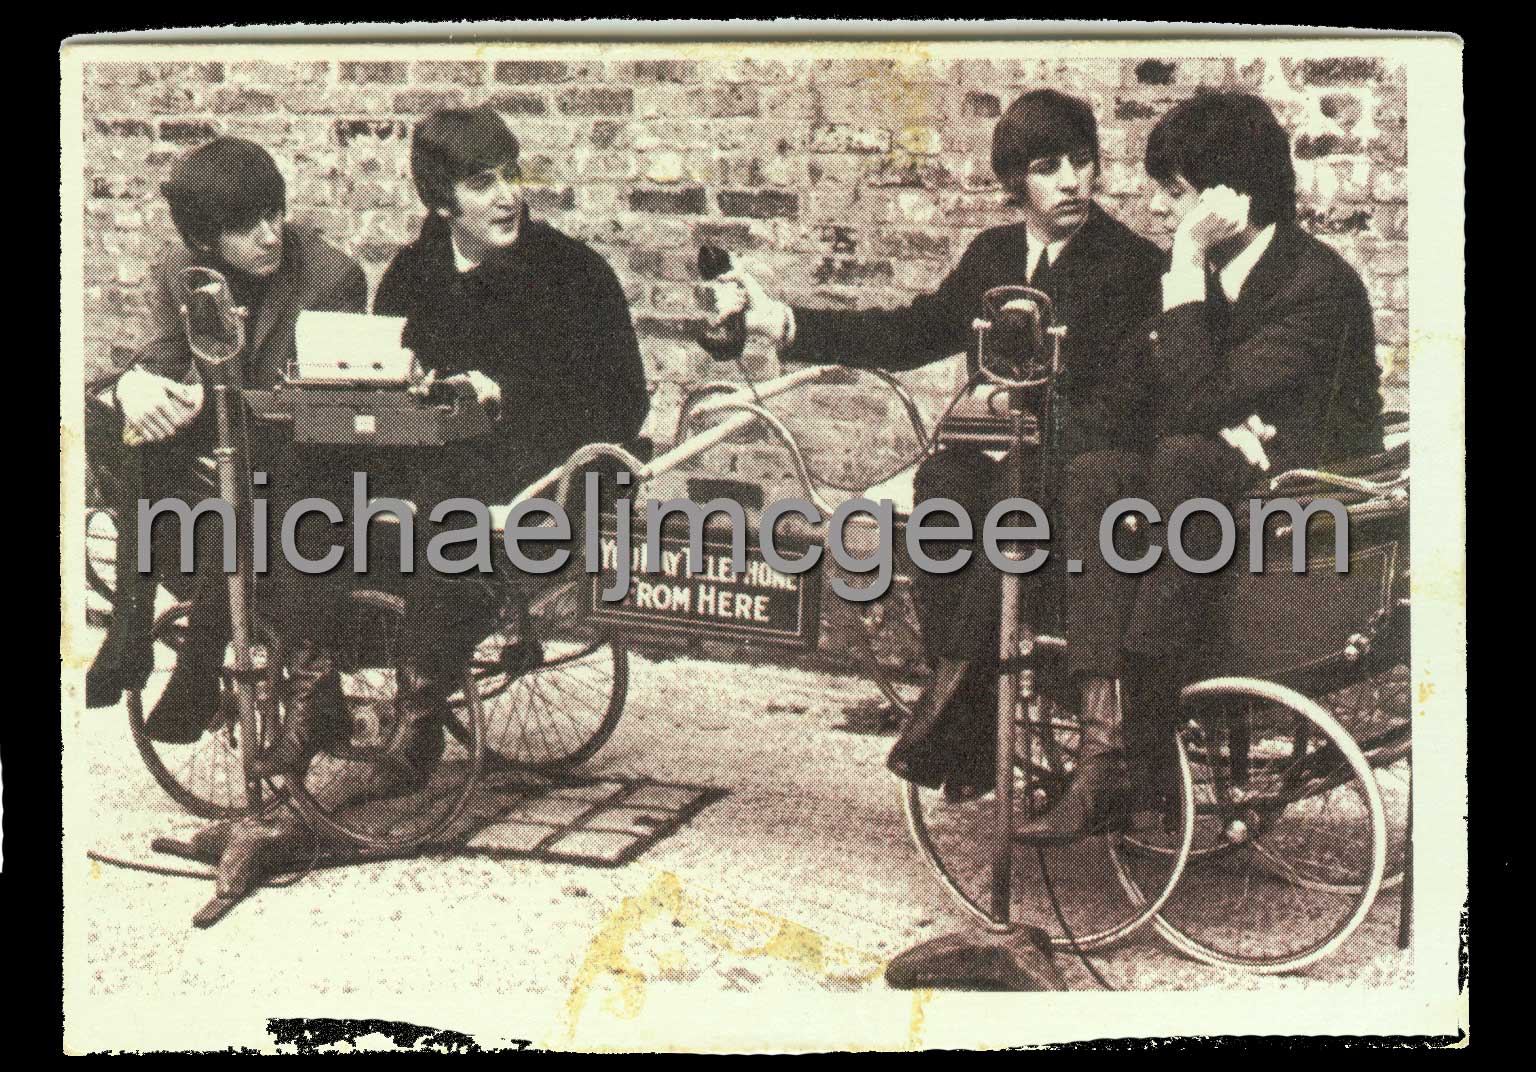 The Beatles / michaeljmcgee.com